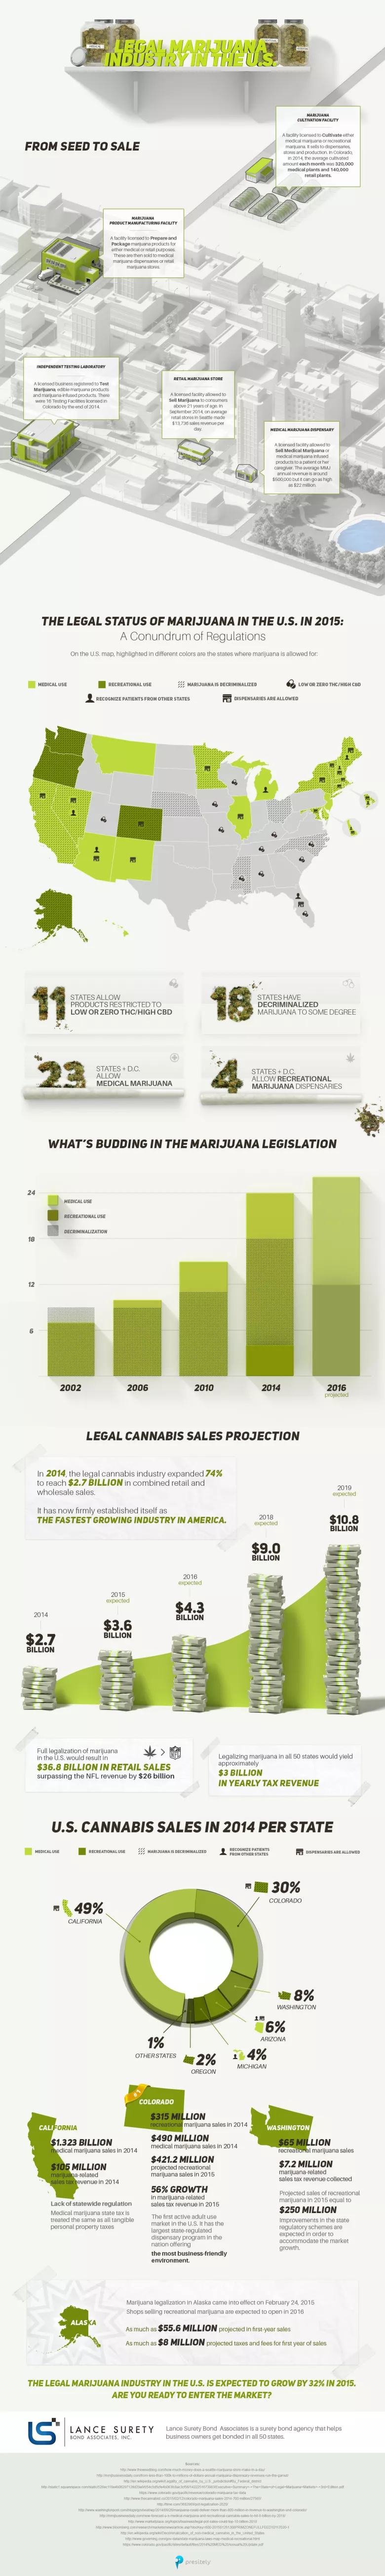 marijuana-industry-infographic